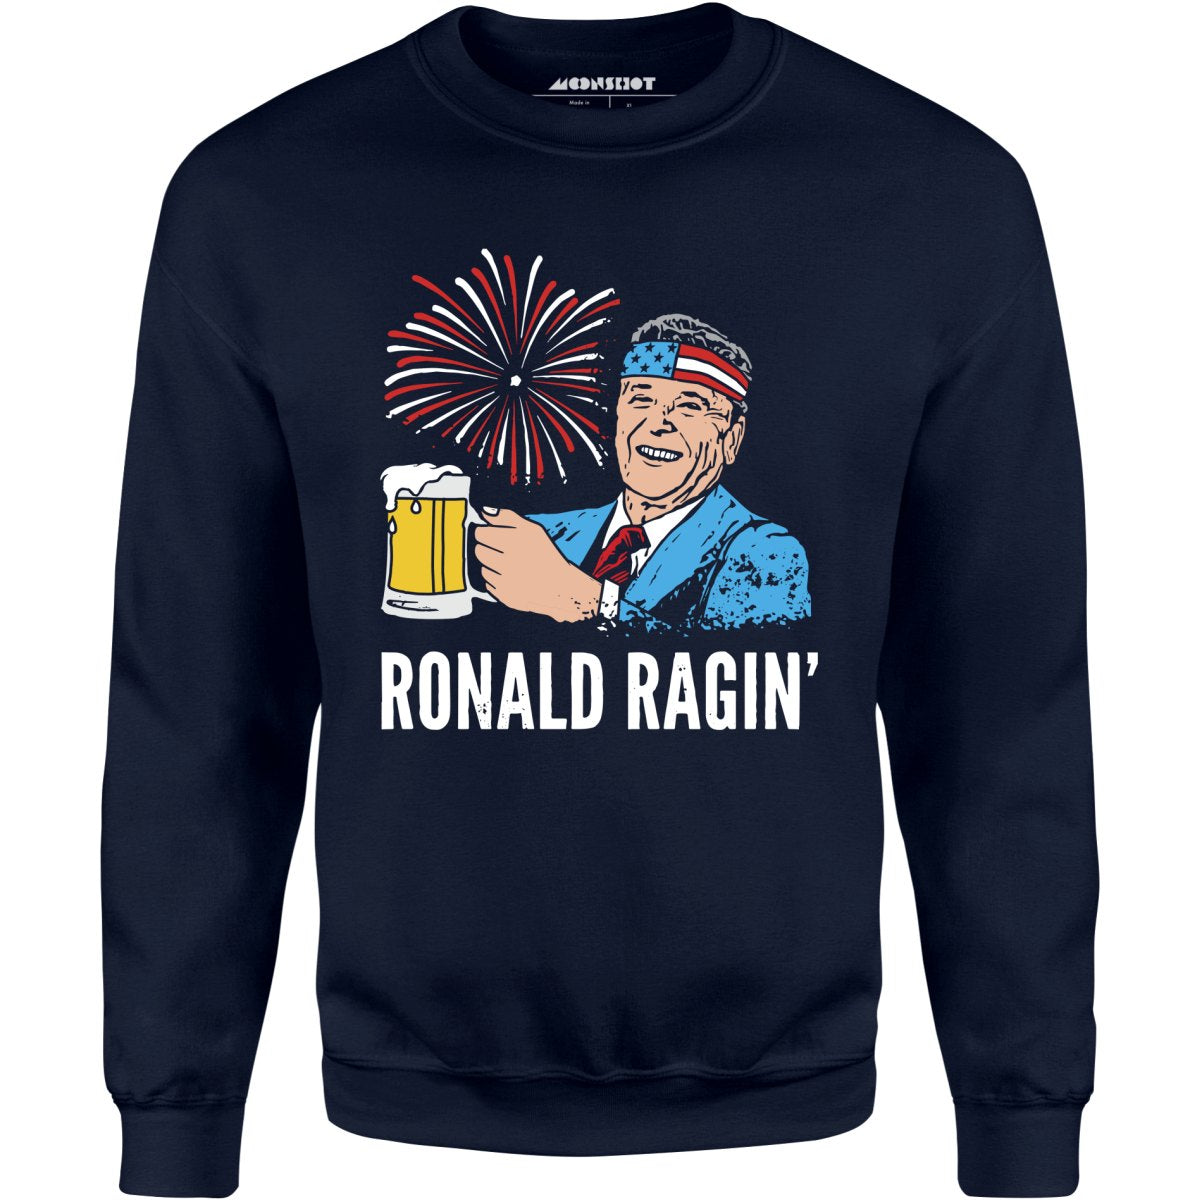 Ronald Ragin' - Unisex Sweatshirt